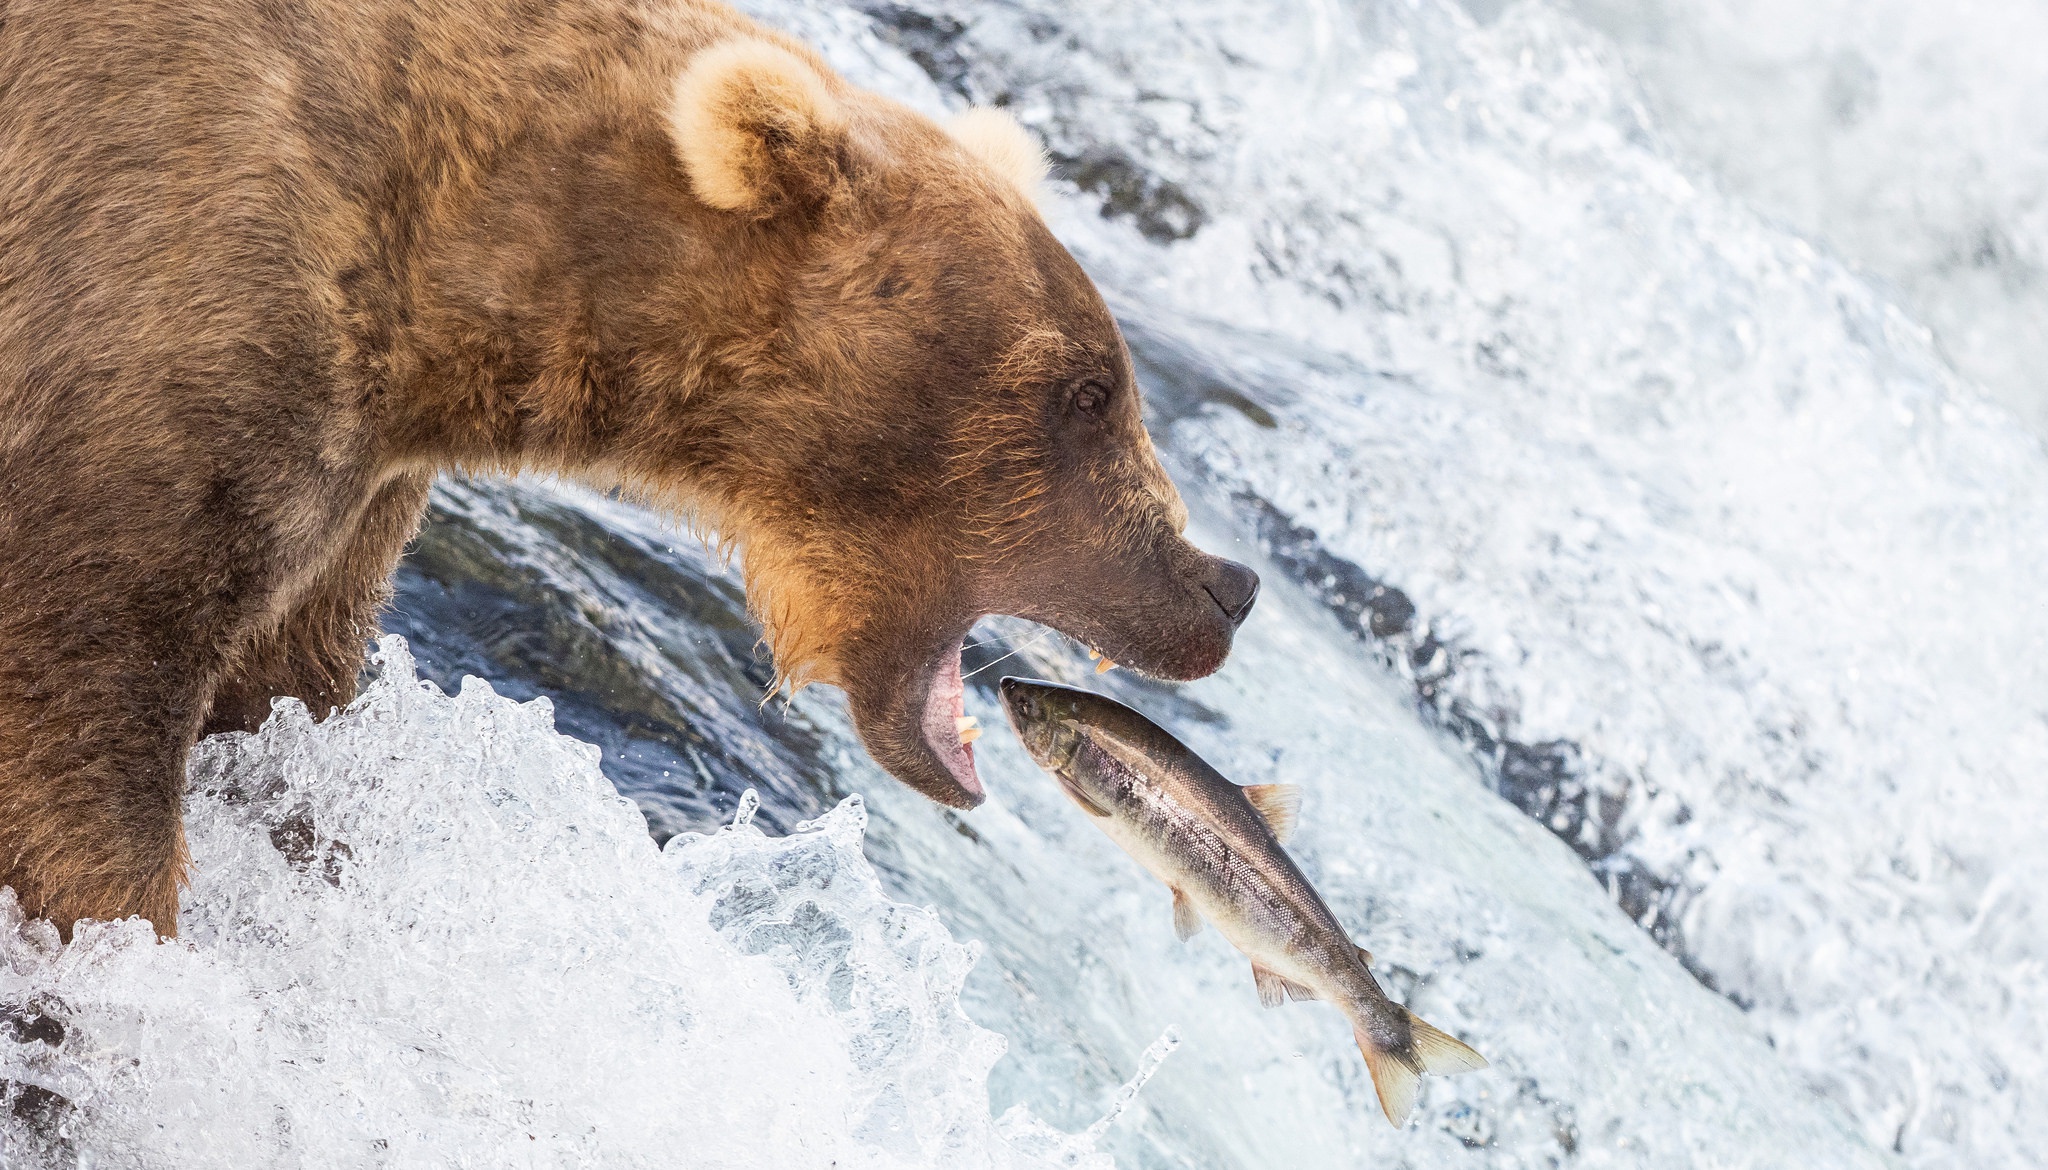 473890 descargar imagen animales, grizzly, pez, oso pardo, osos: fondos de pantalla y protectores de pantalla gratis